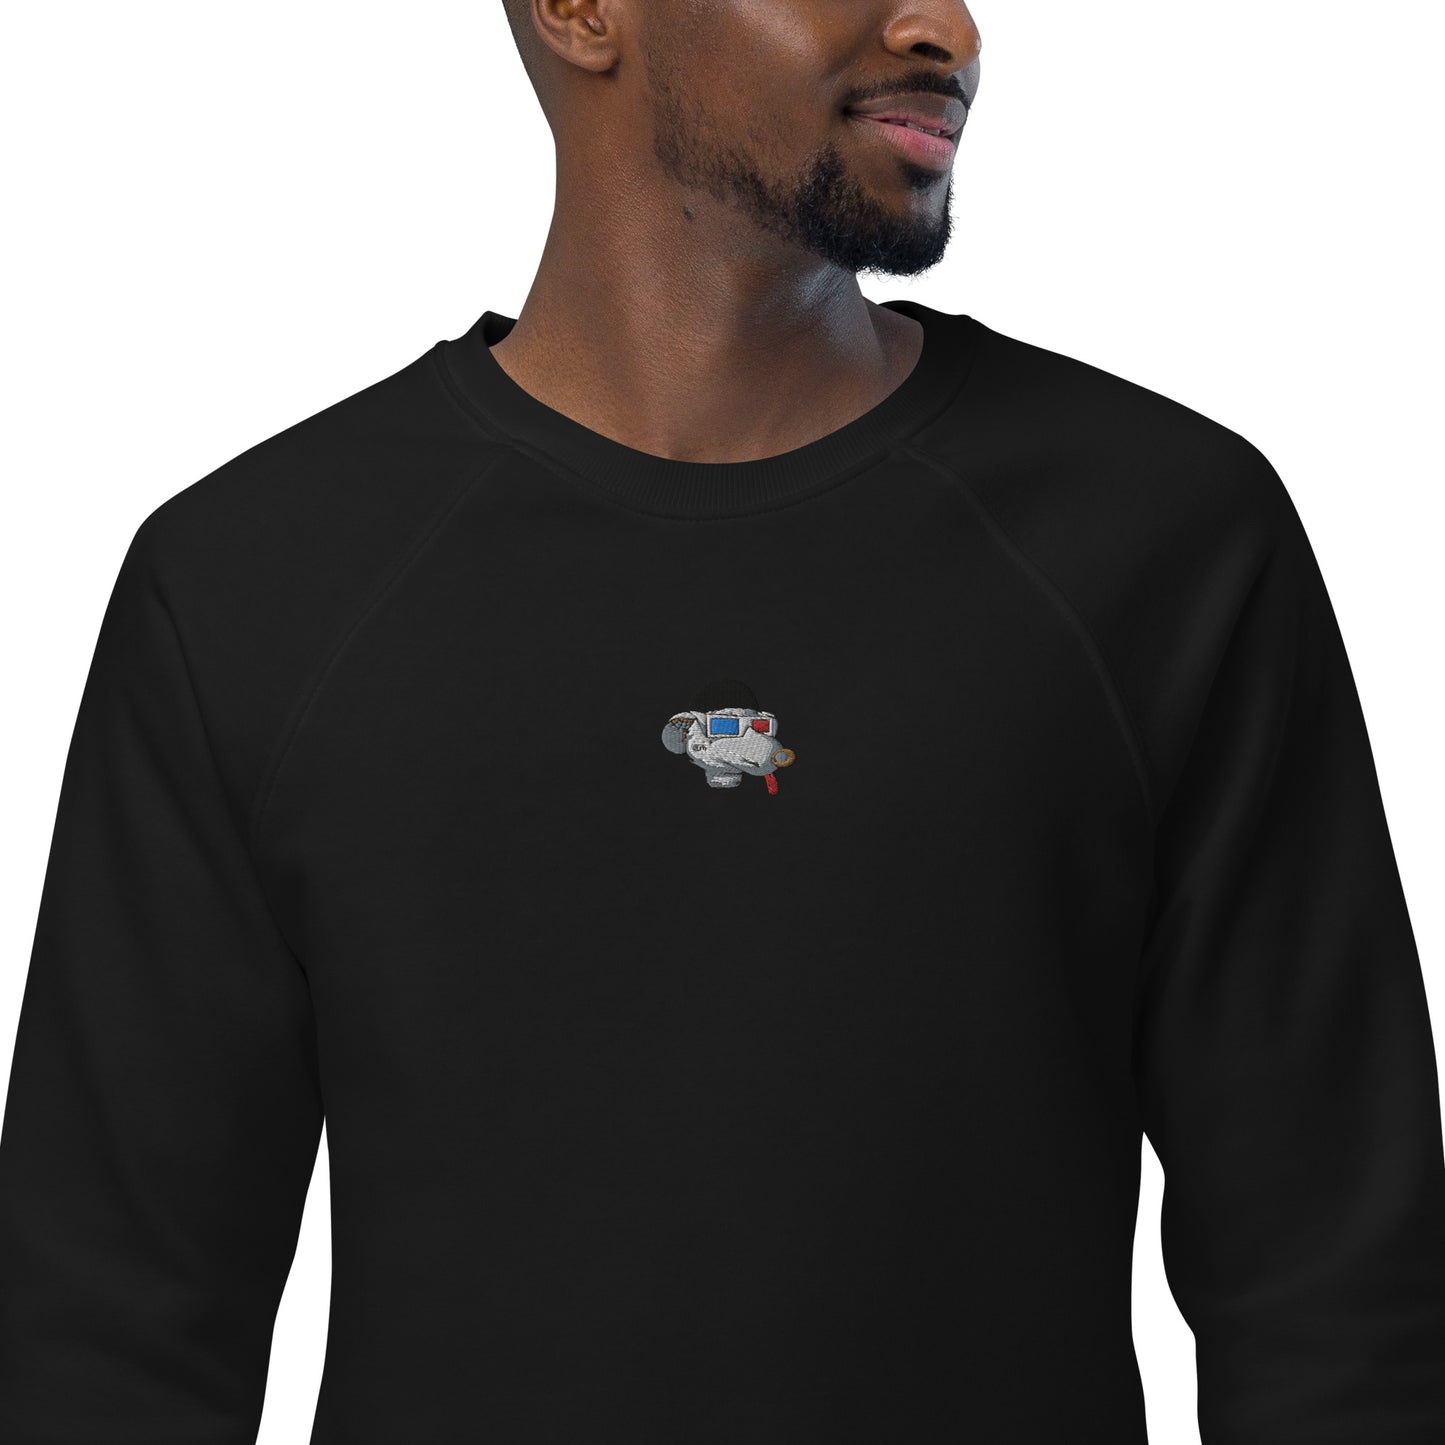 Unisex organic raglan sweatshirt with embroidered front logo feat Fat Rat #6058